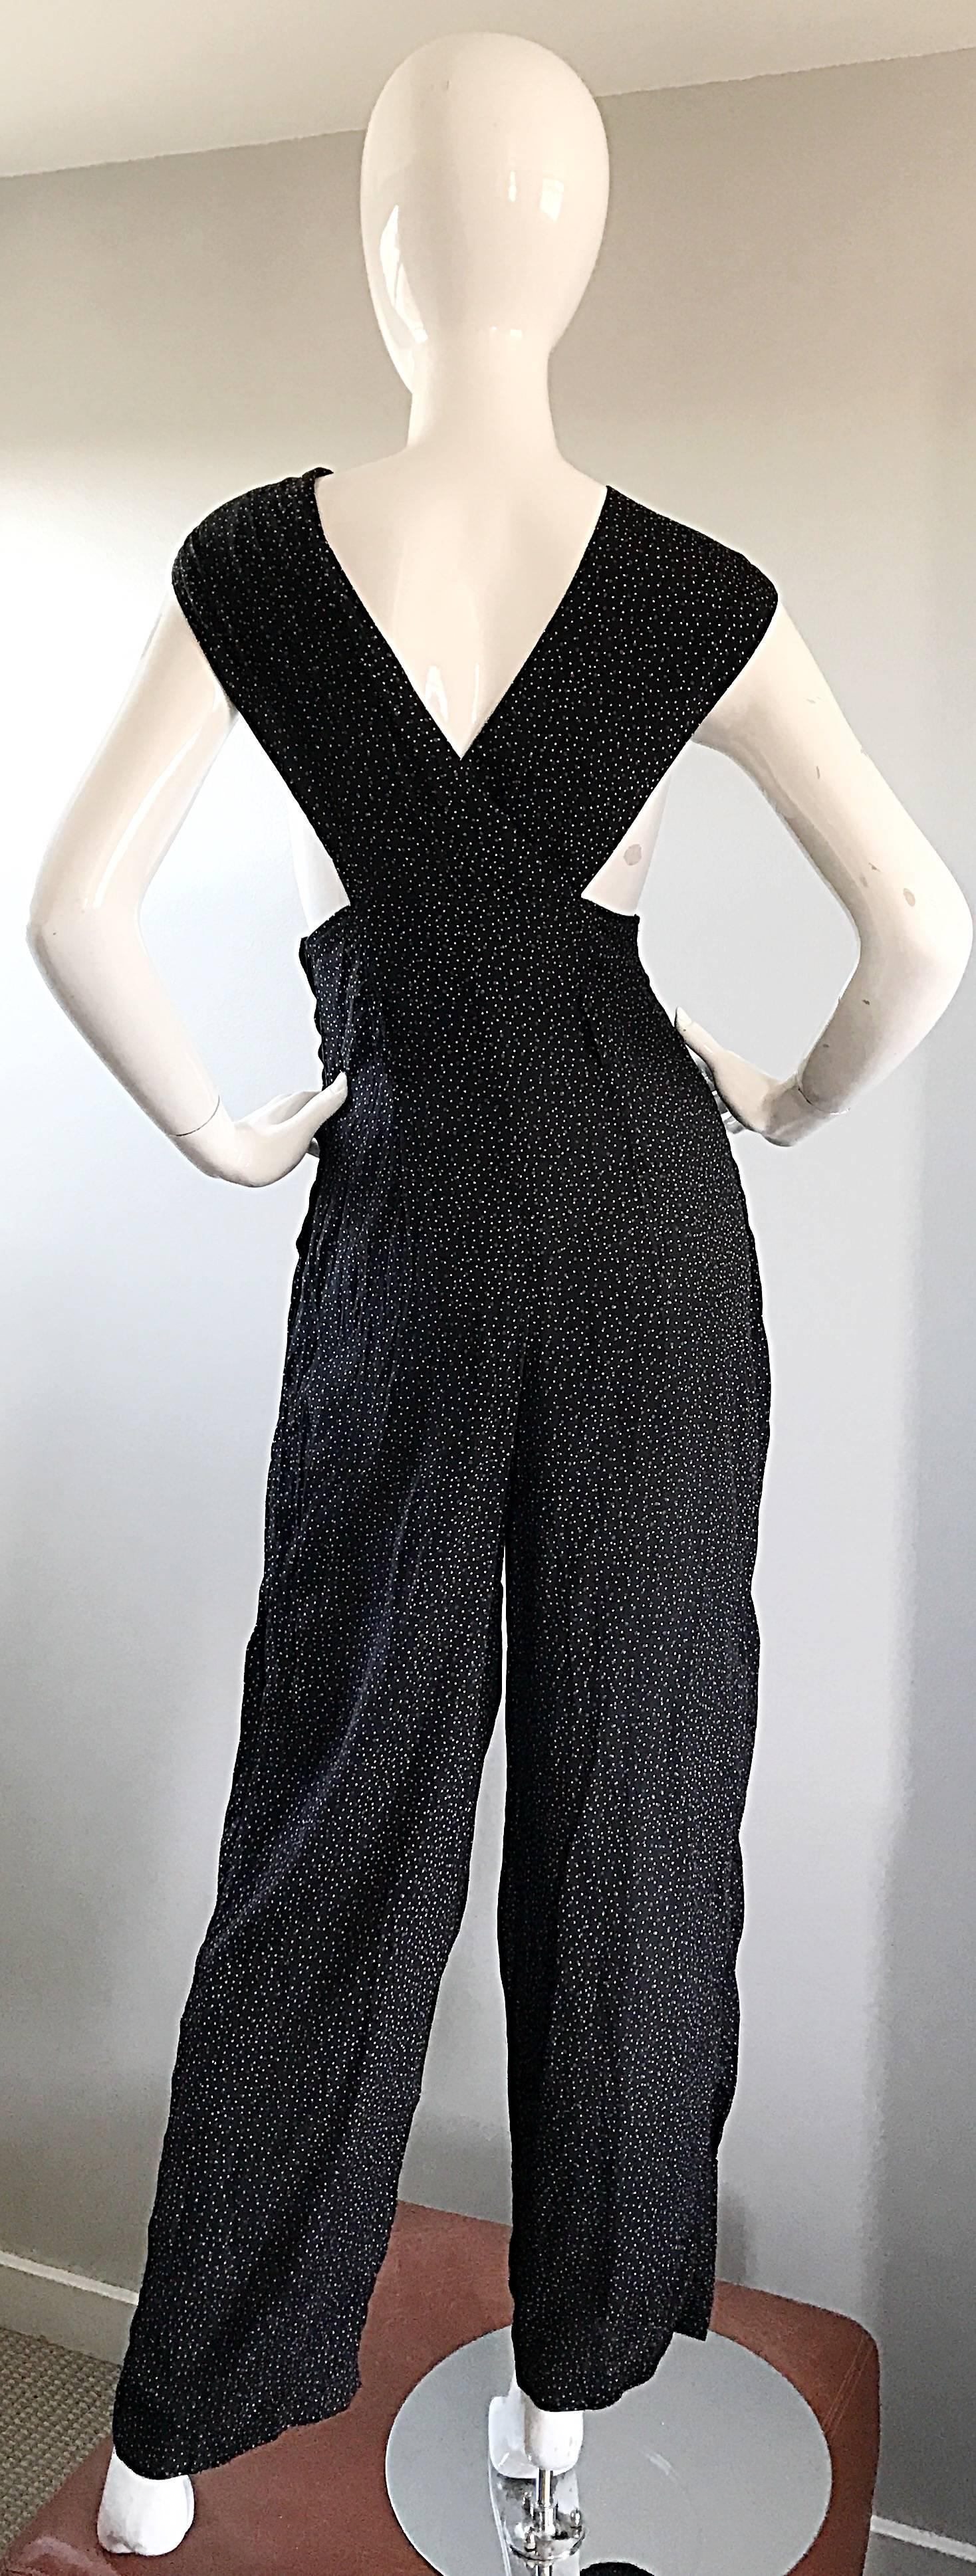 Avant Garde Vintage Shelli Segal 1990s Black + Brown + White Polka Dot Jumpsuit For Sale 2